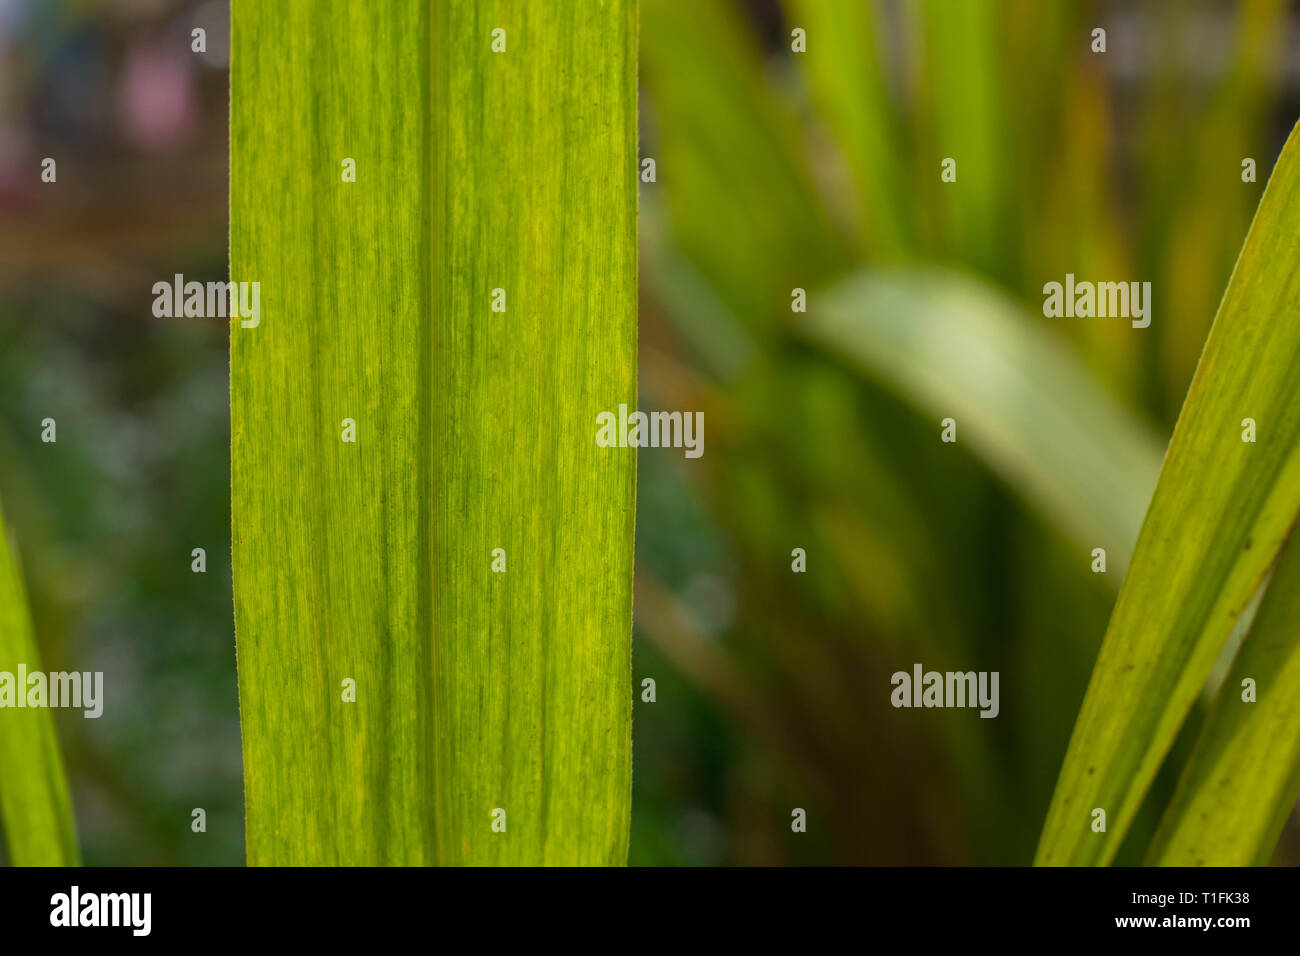 macro shot of green sugarcane leaves with beautiful patterns. Stock Photo